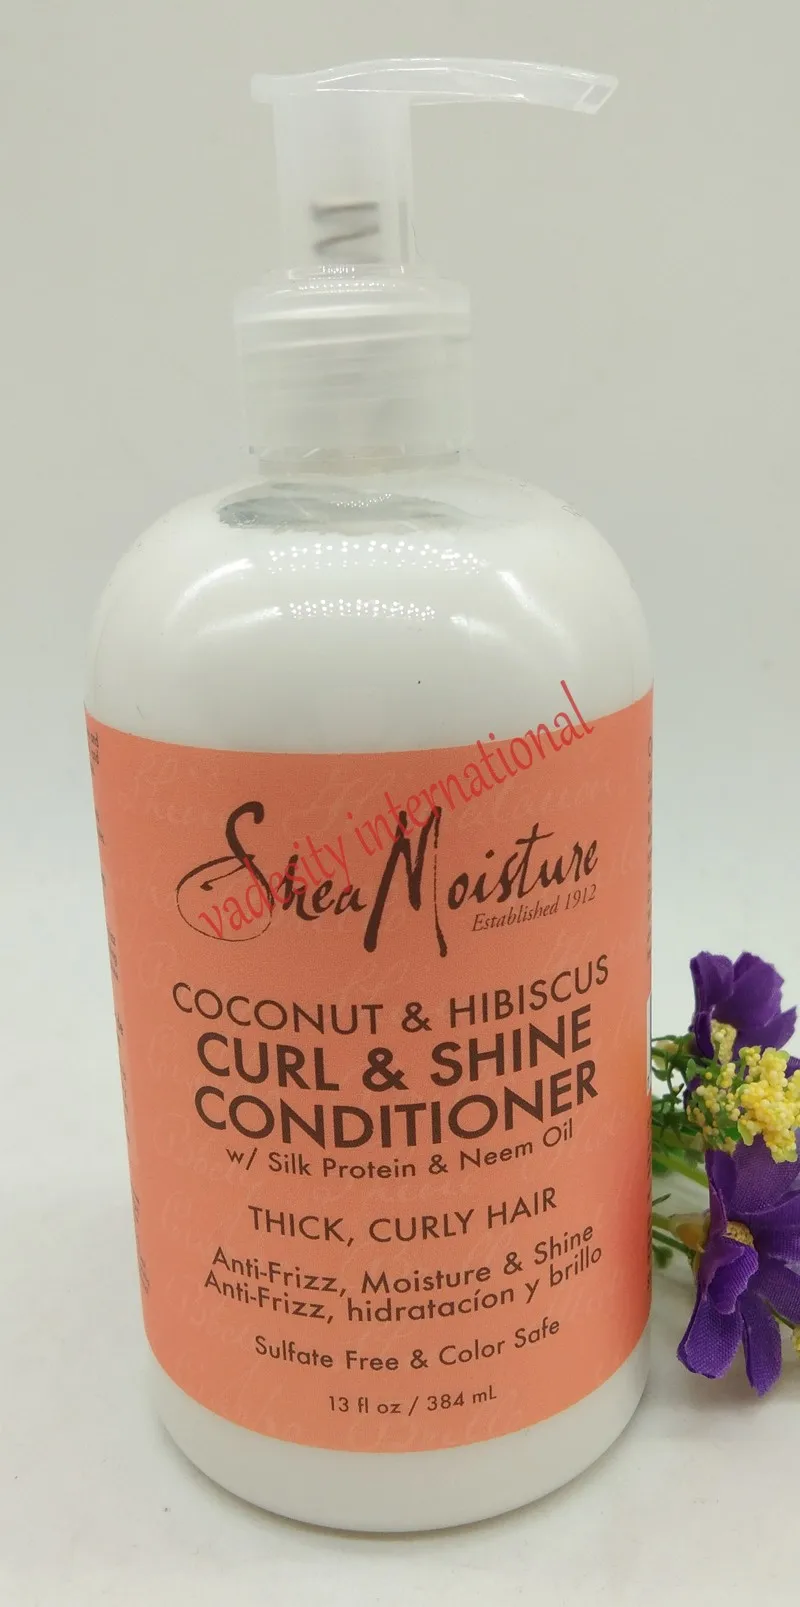 

Shea Moisture Coconut & Hibiscus Curl Conditioner 384ml